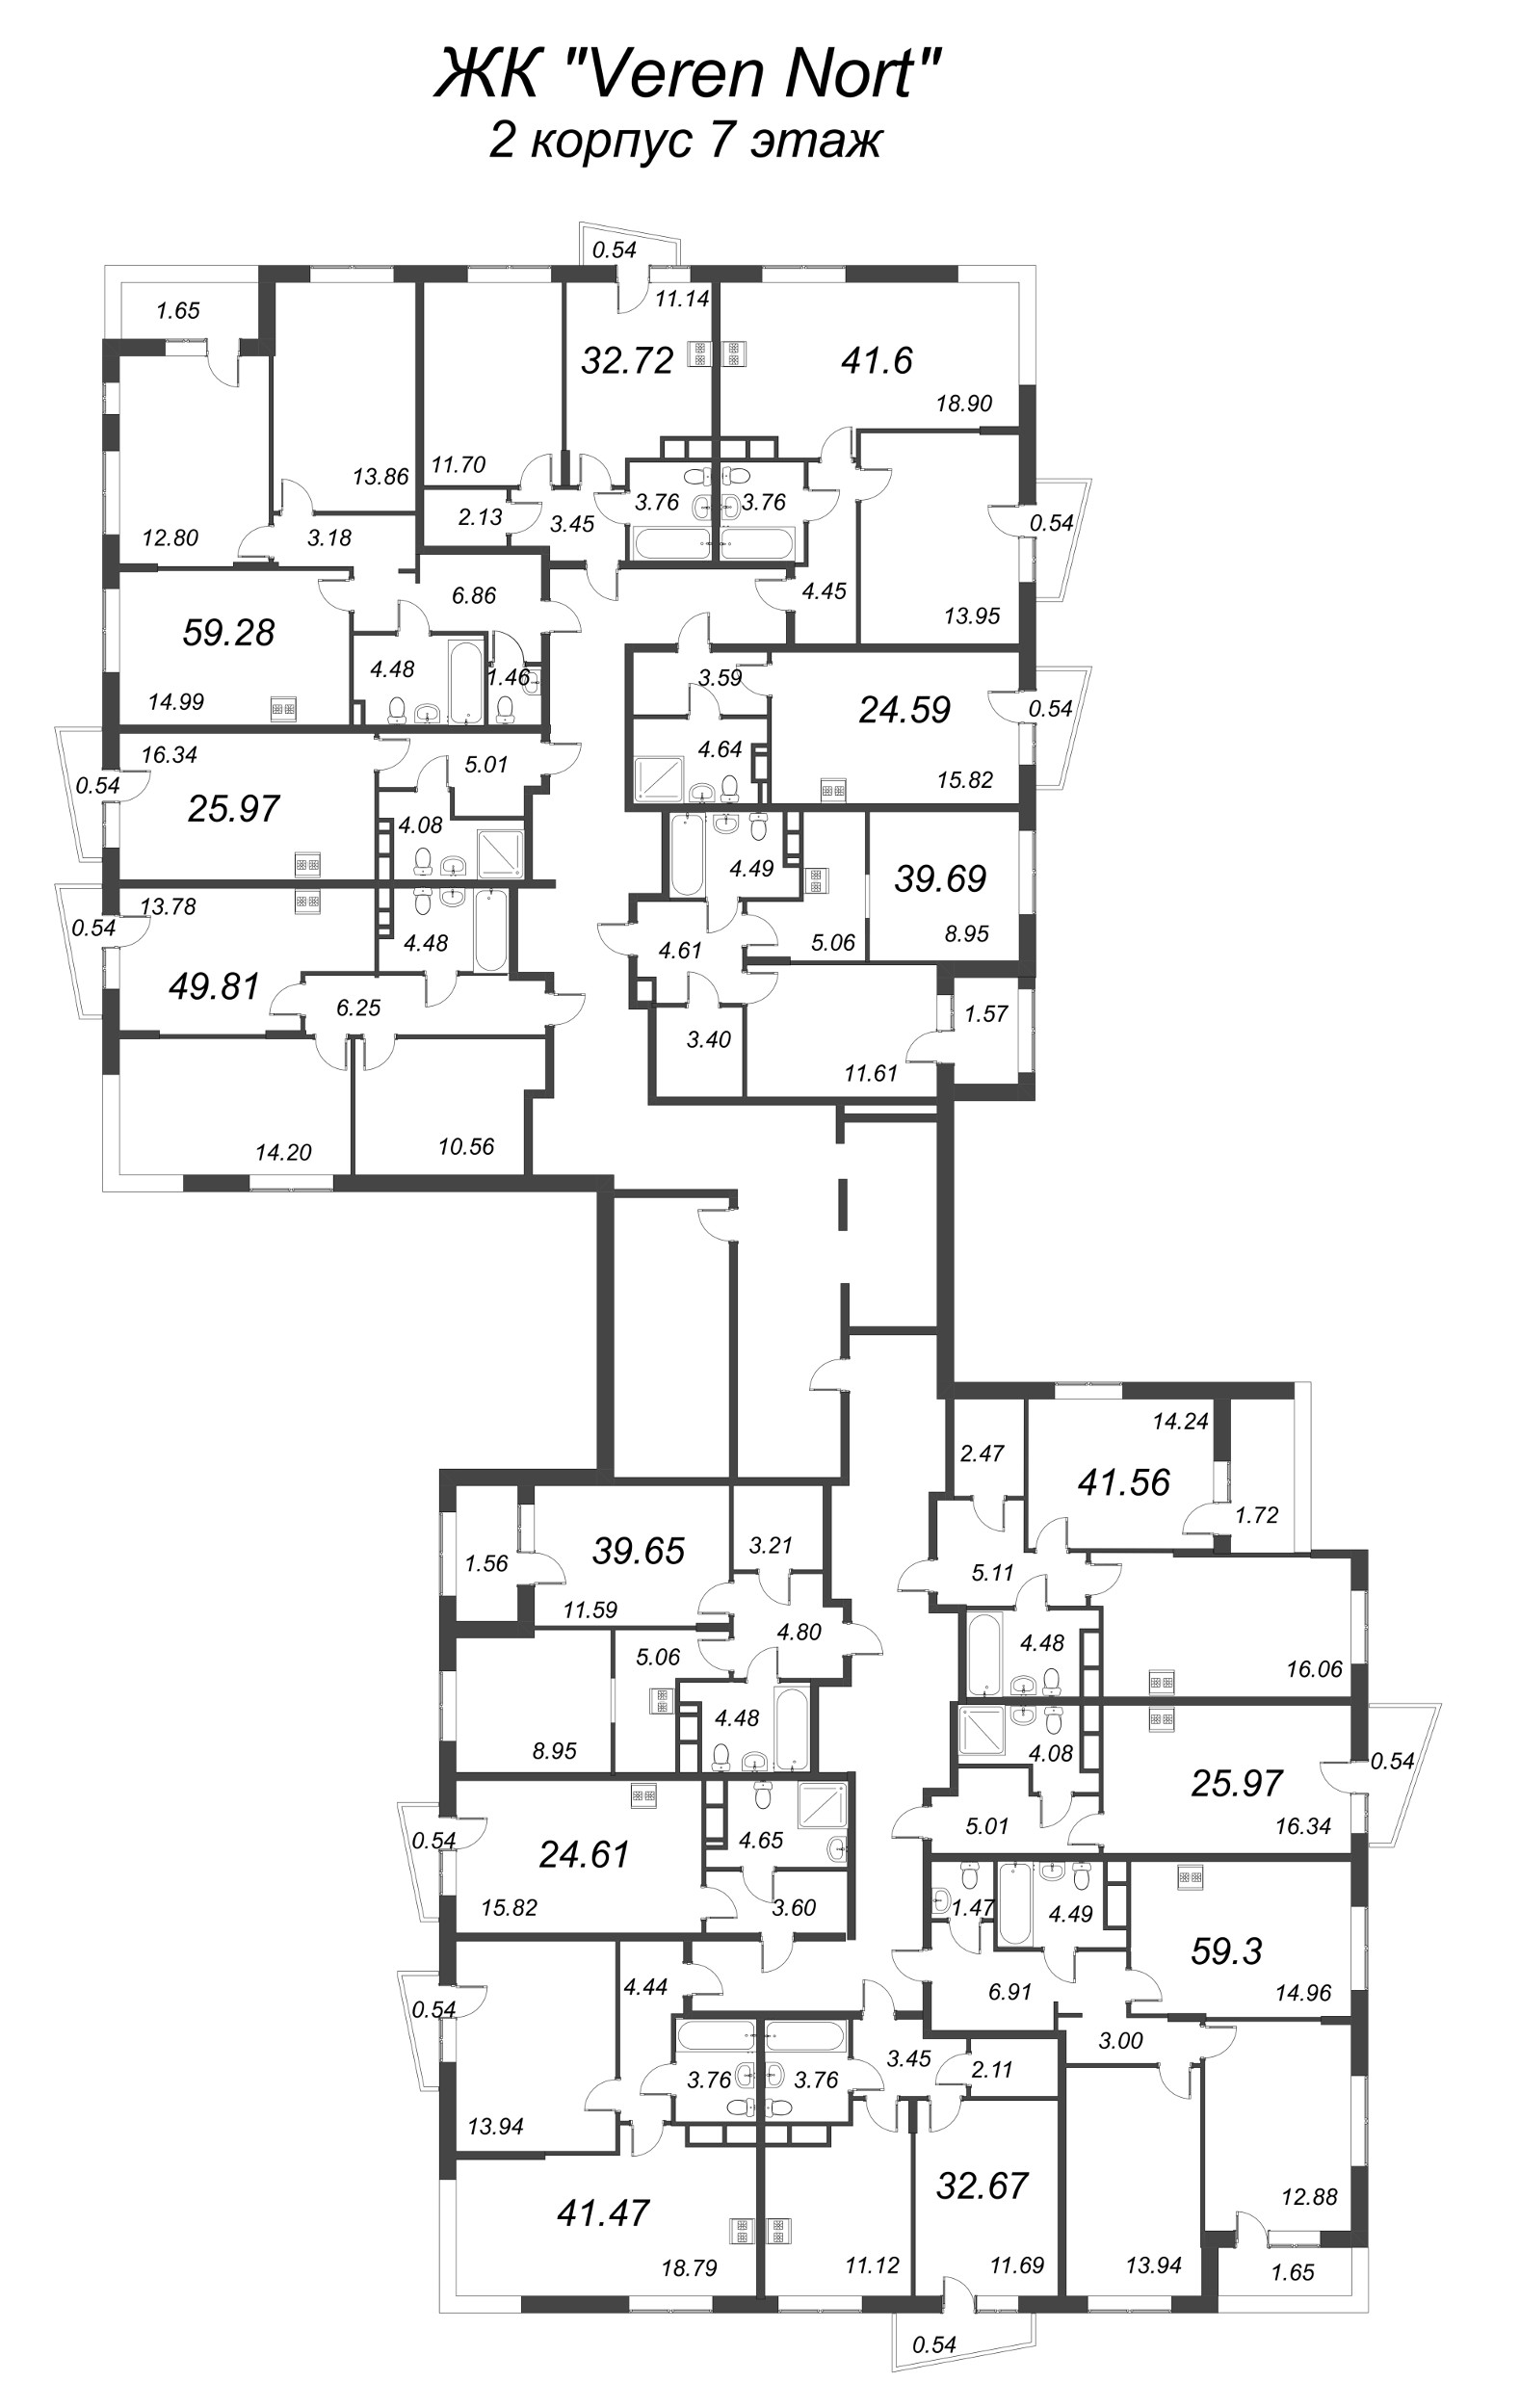 2-комнатная (Евро) квартира, 39.65 м² - планировка этажа